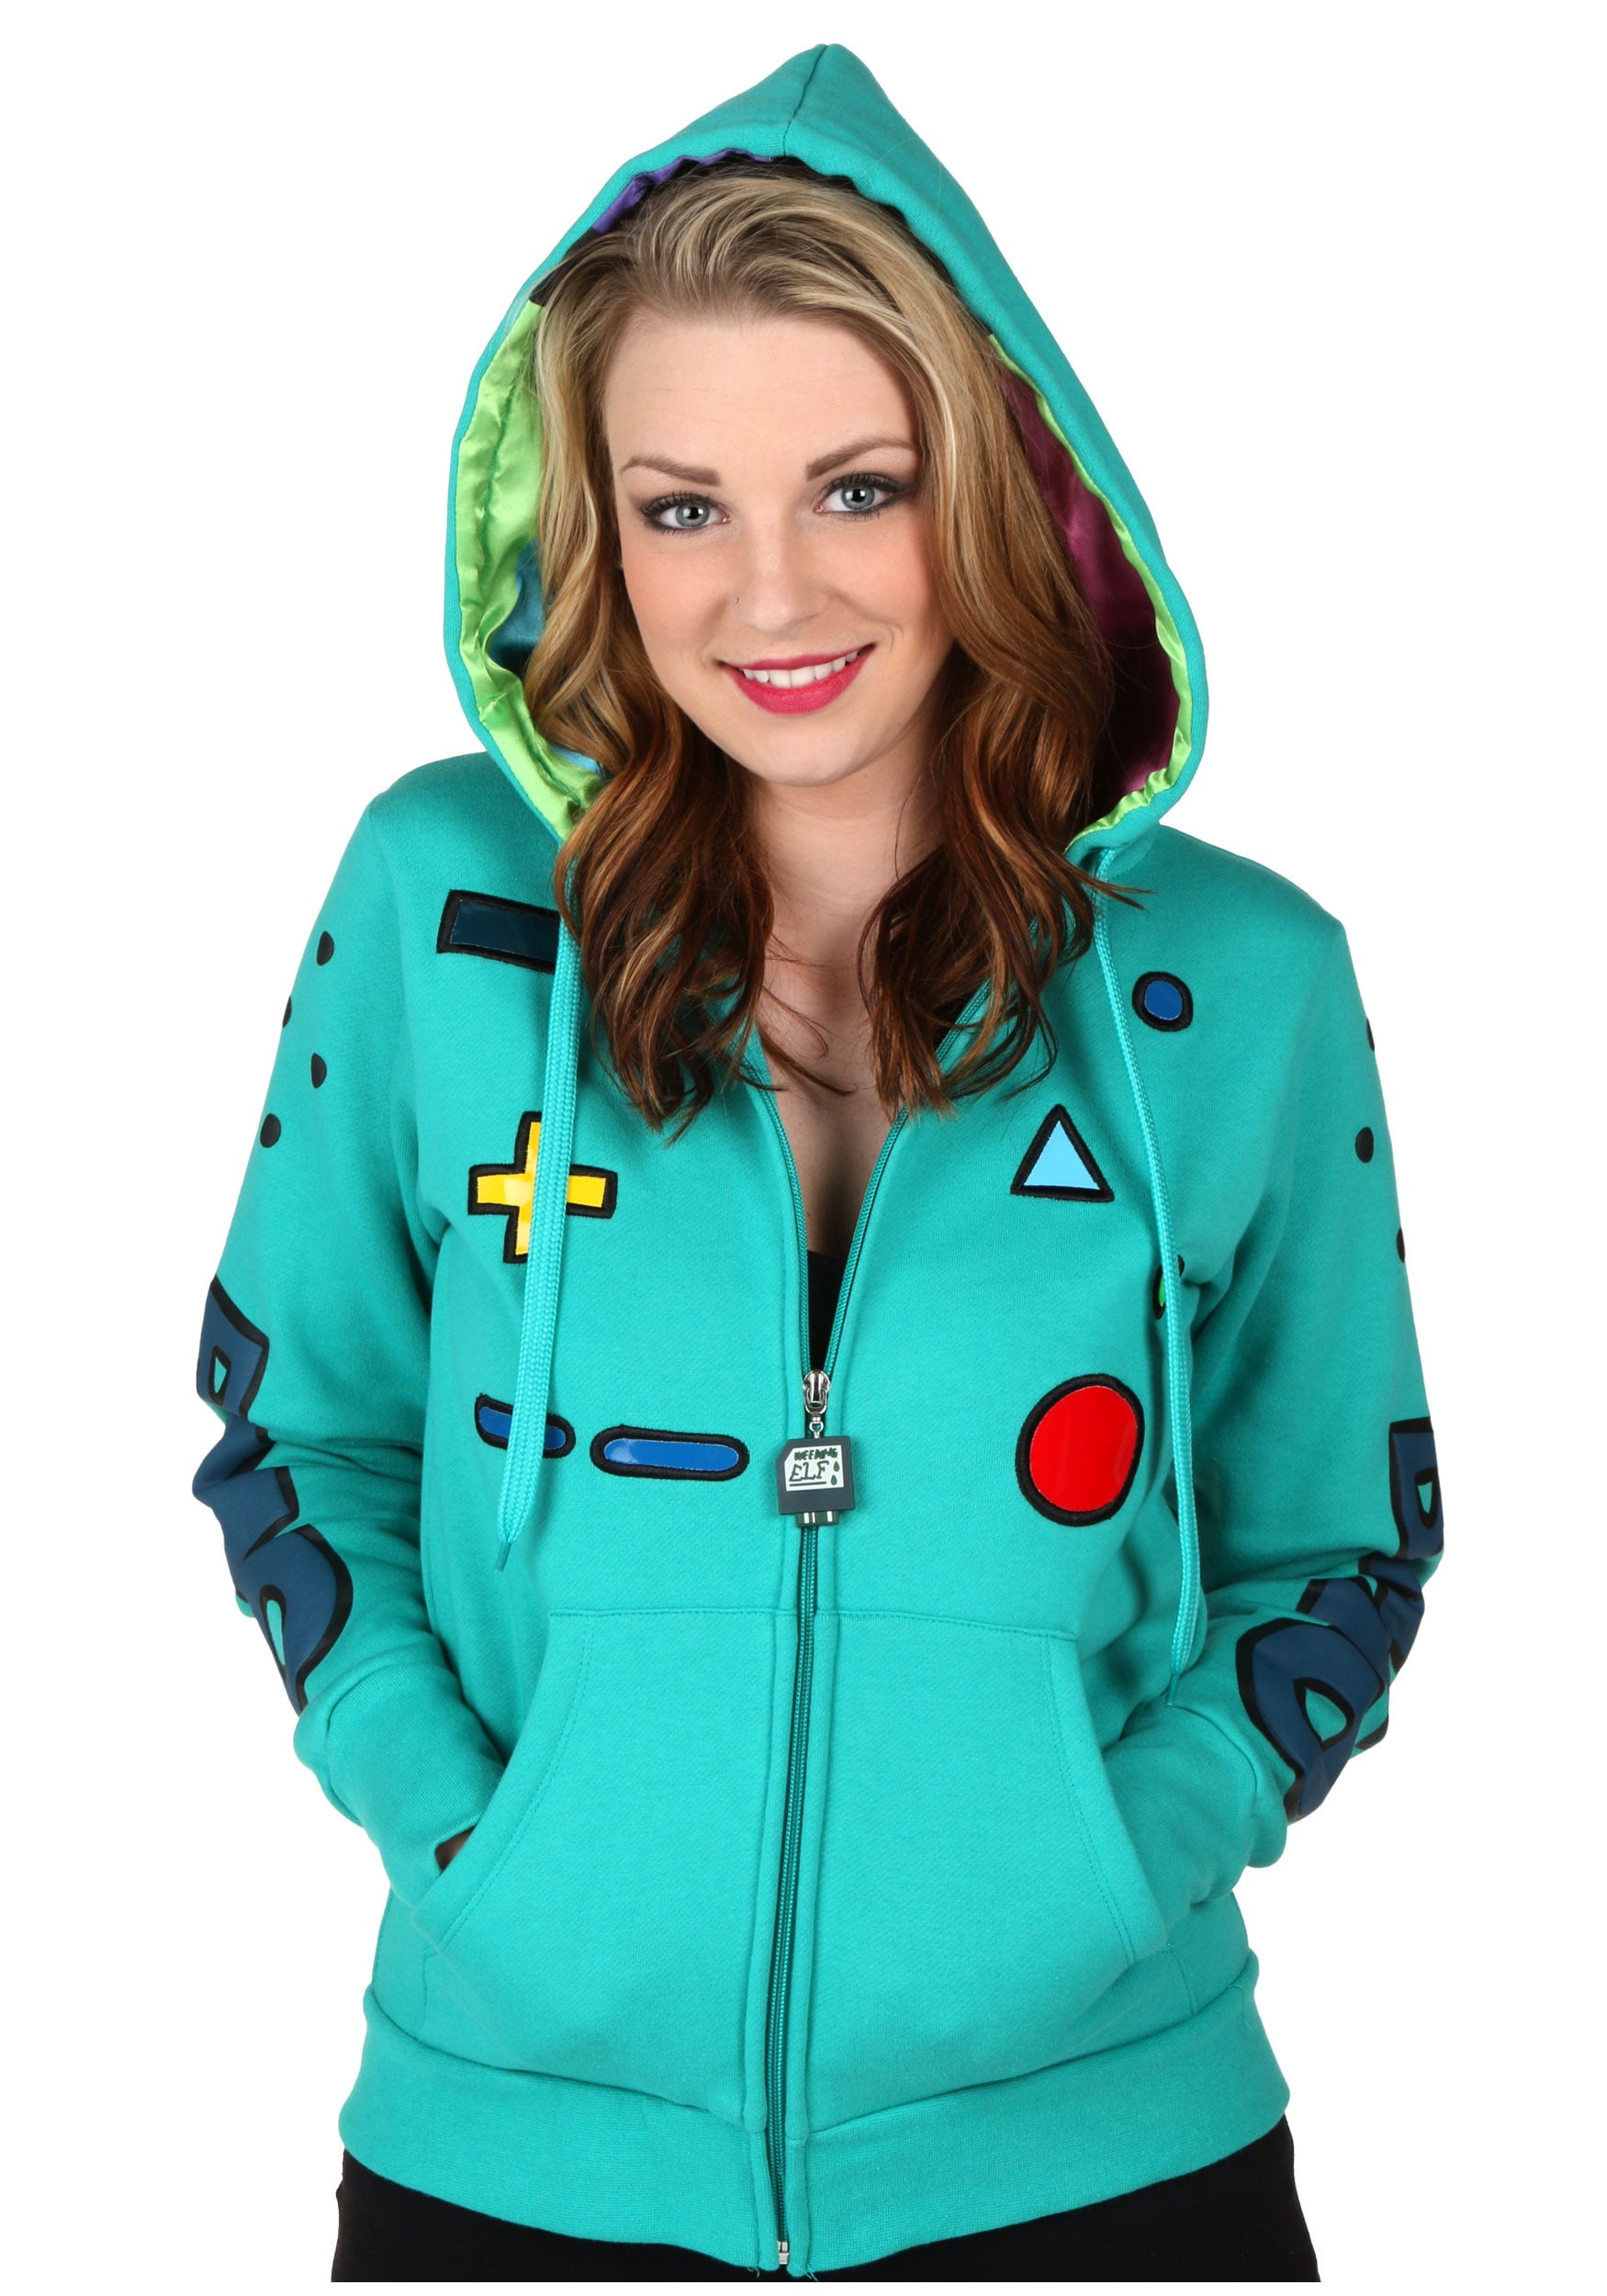 Woman hoodies Adventure Time Galaxy Printed Pullover Pocket hoodies S-3XL 